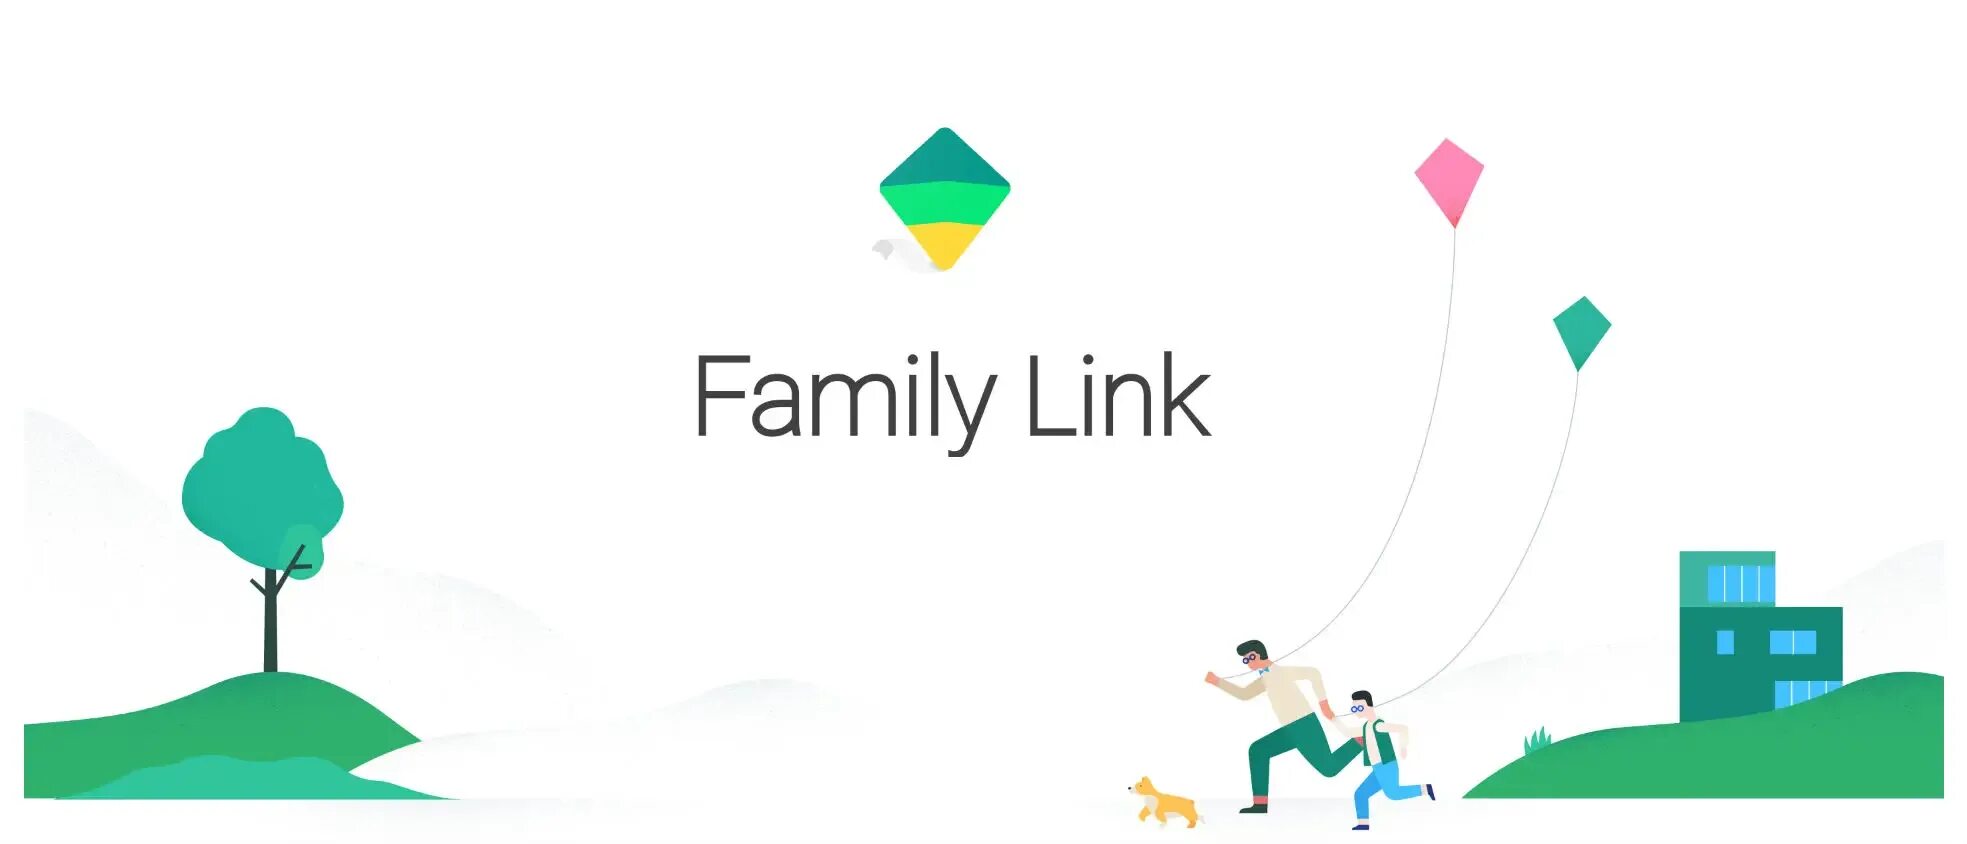 Family link семейная группа. Фэмили линк. Гугл Фэмили линк. Фэмили линк картинка. Значок Family link.